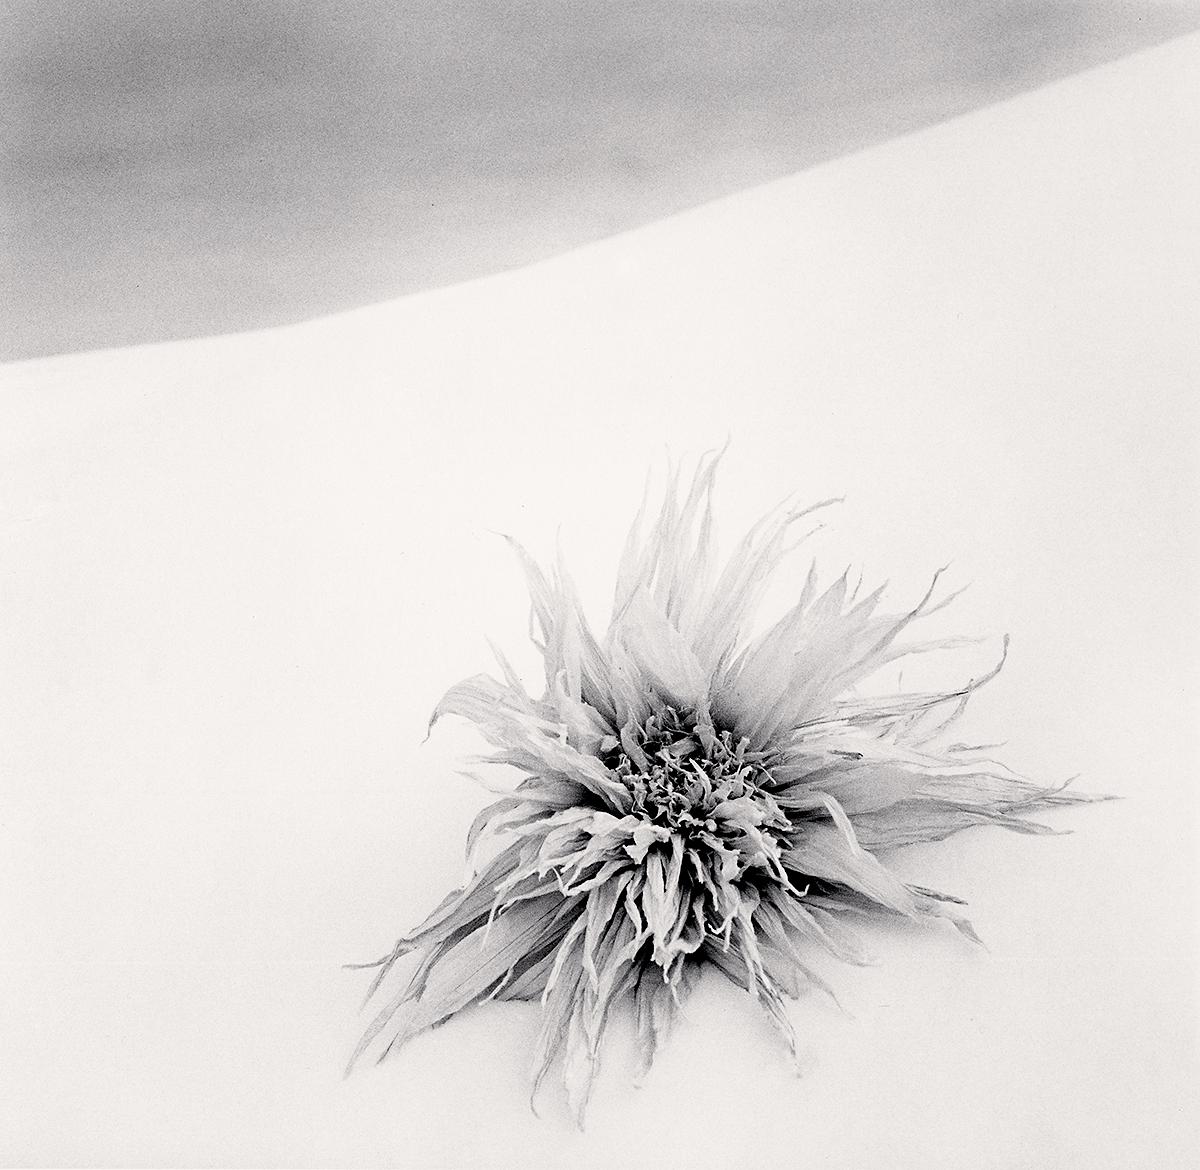 Michael Kenna Black and White Photograph - Maki's Washi Flowers, Study 4, Hokkaido, Japan